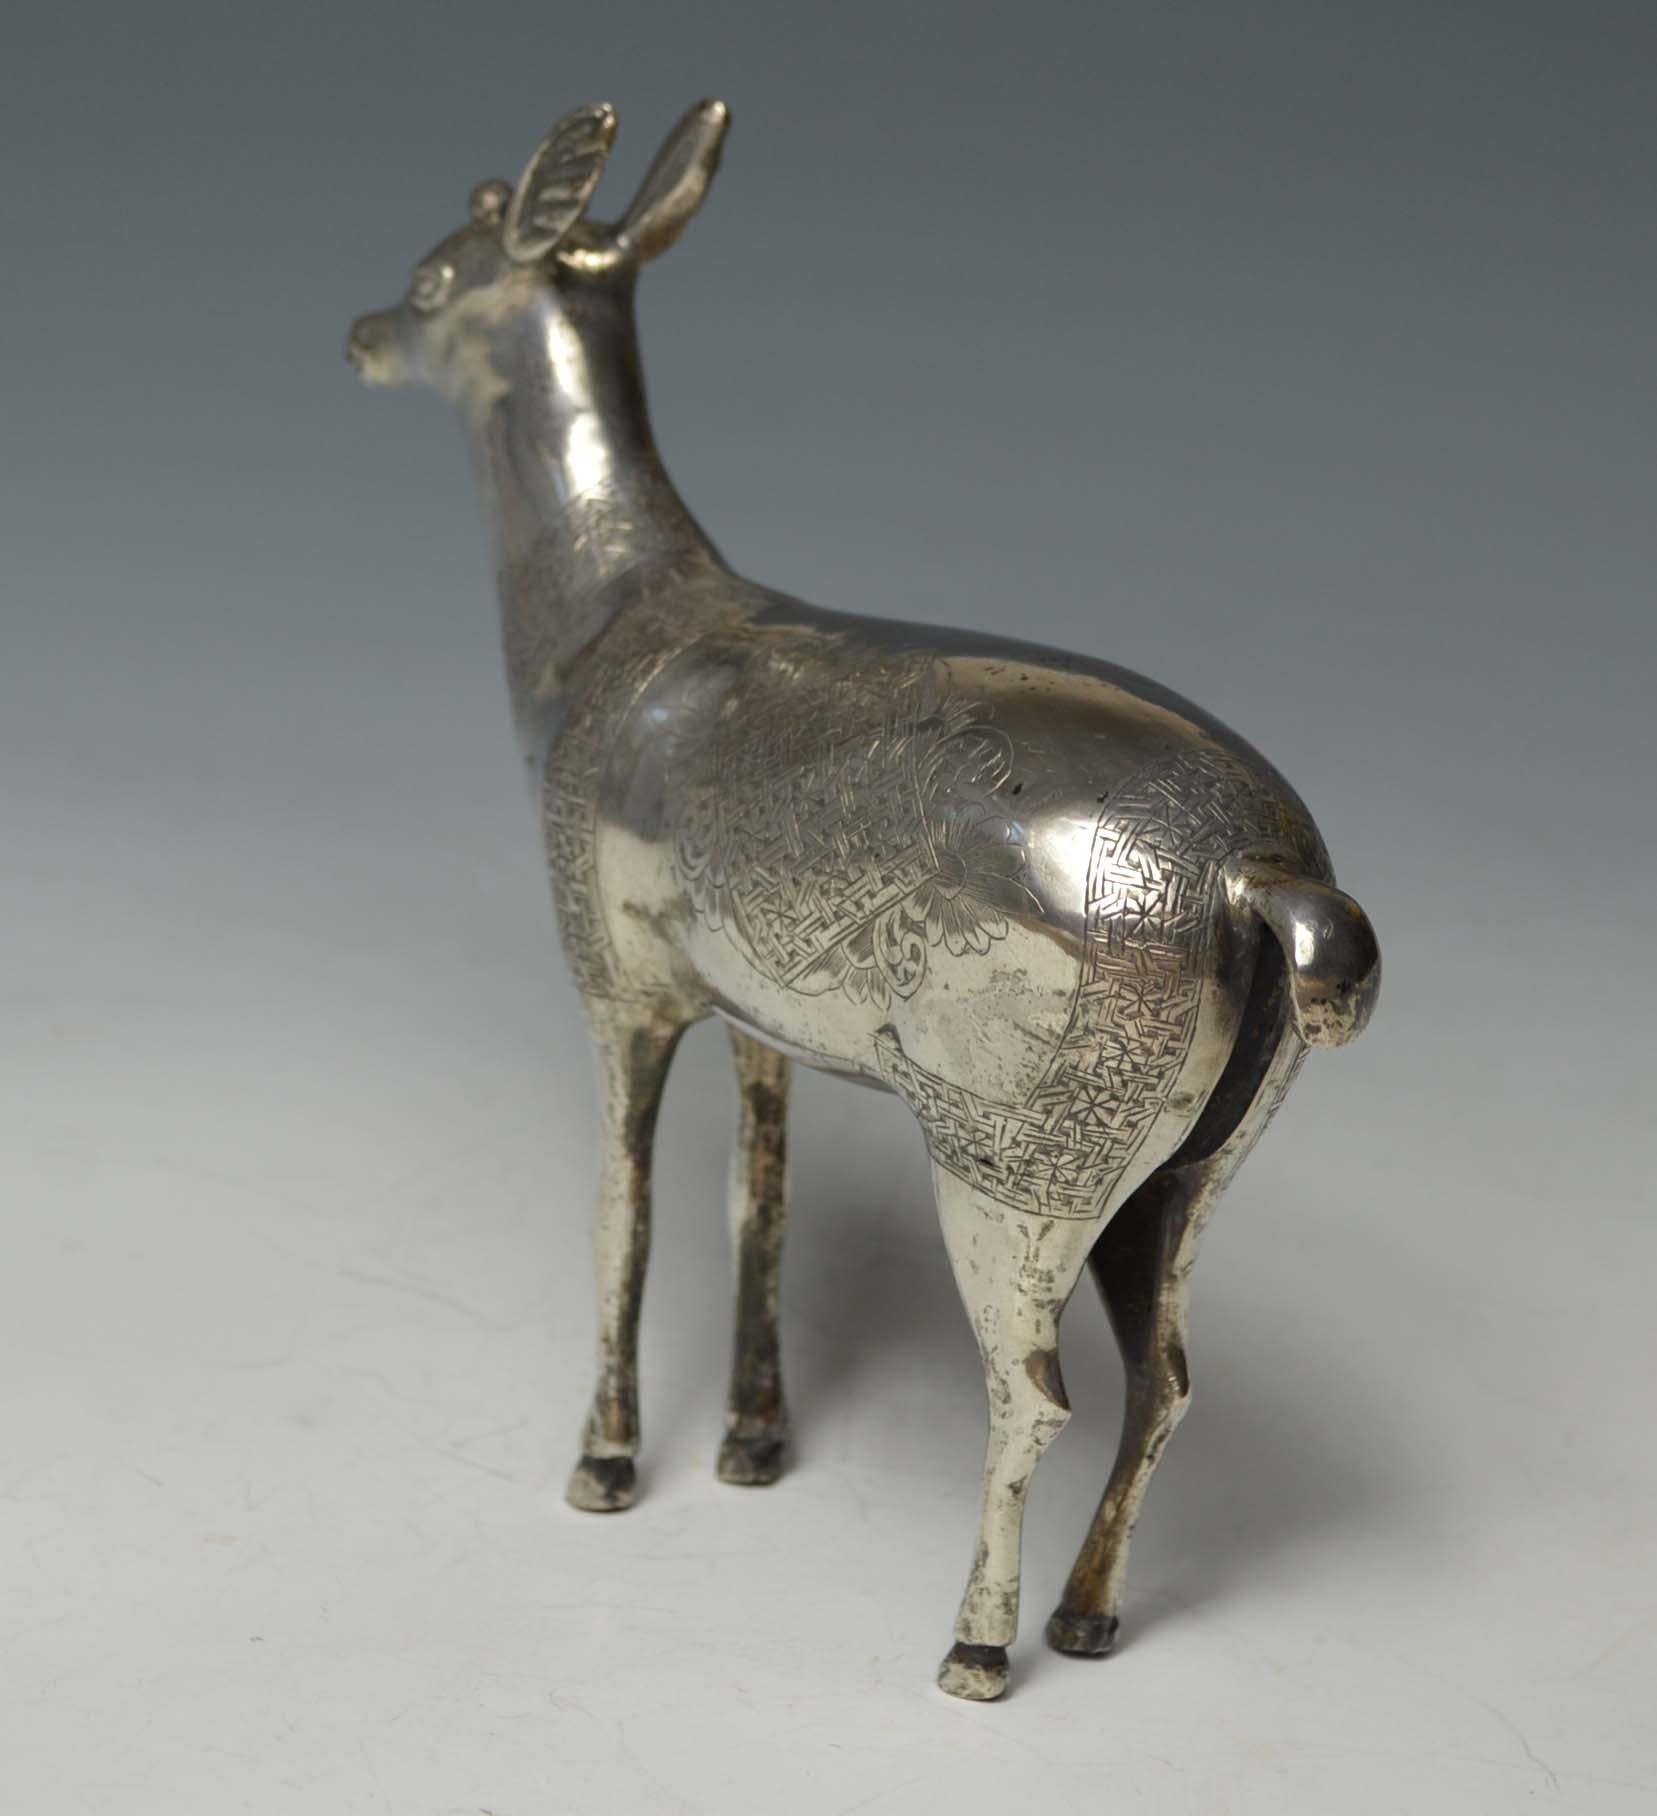  Rare Antique Persian Qajar Silver Deer Figure Islamic Art التحف الفنية الإسلامي 1